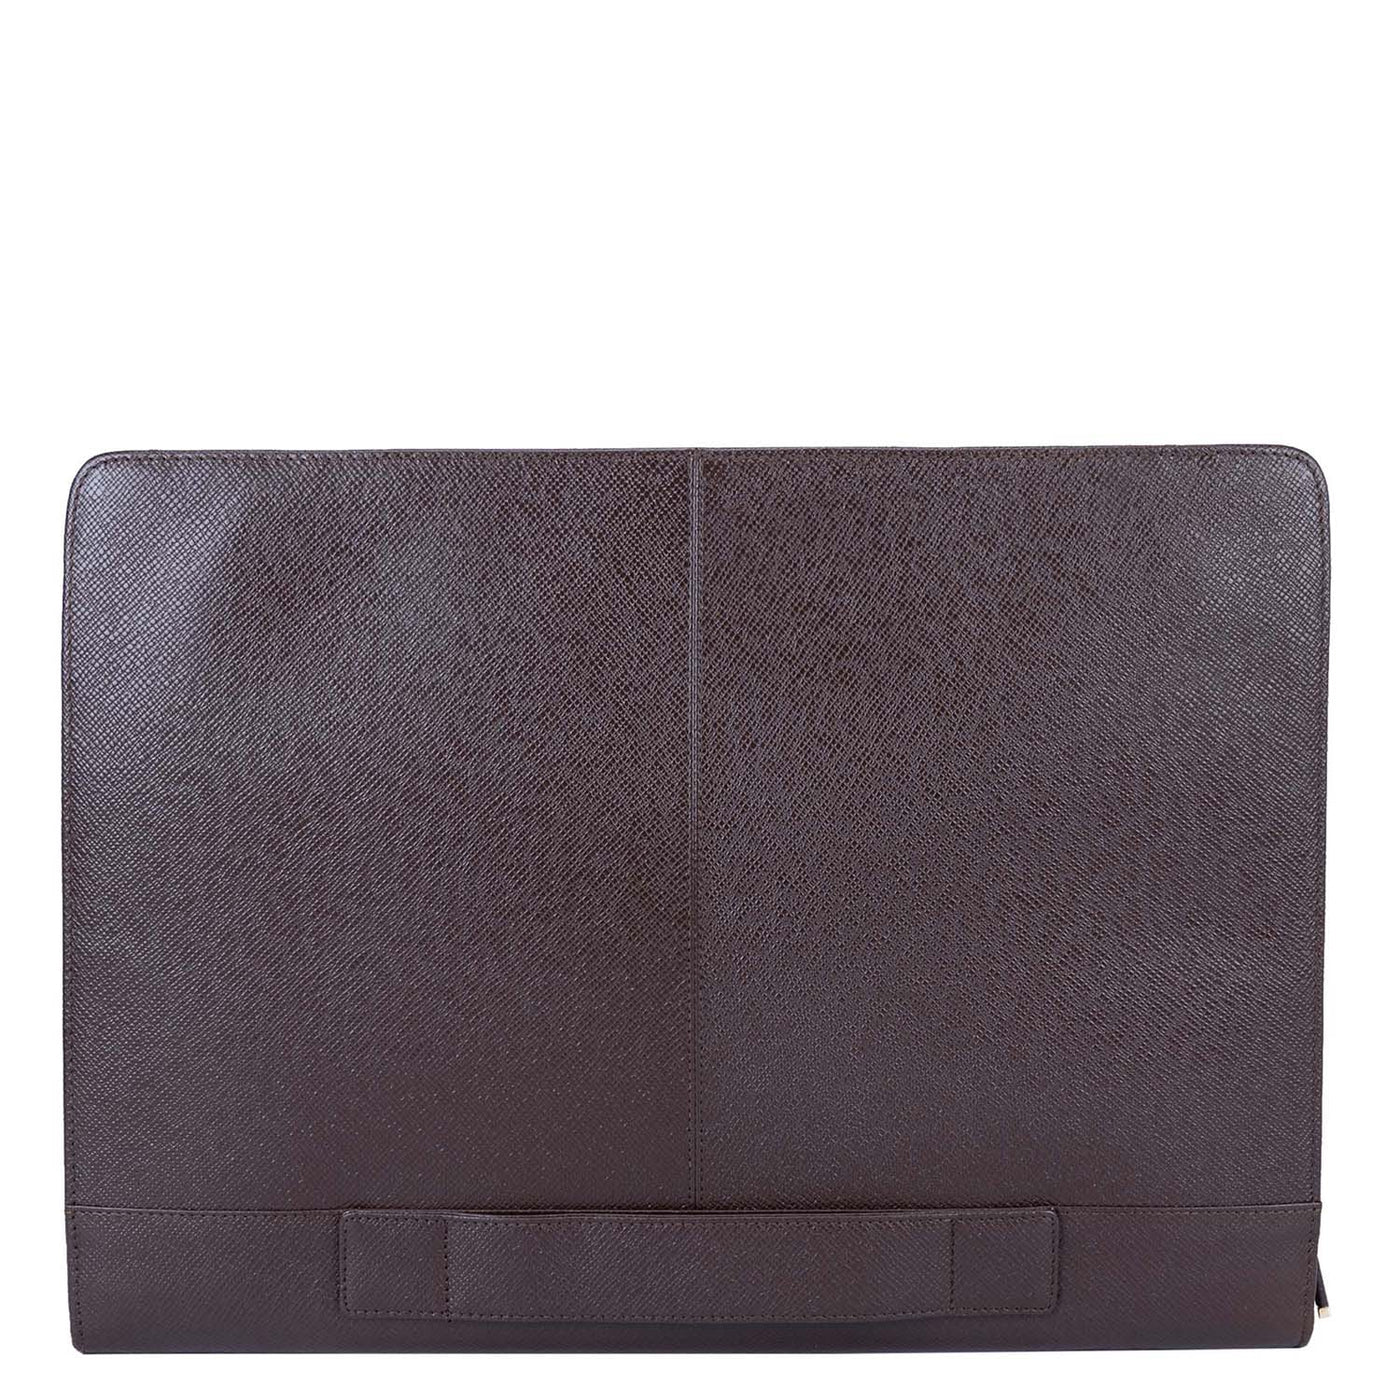 Franzy Leather Folder - Chocolate